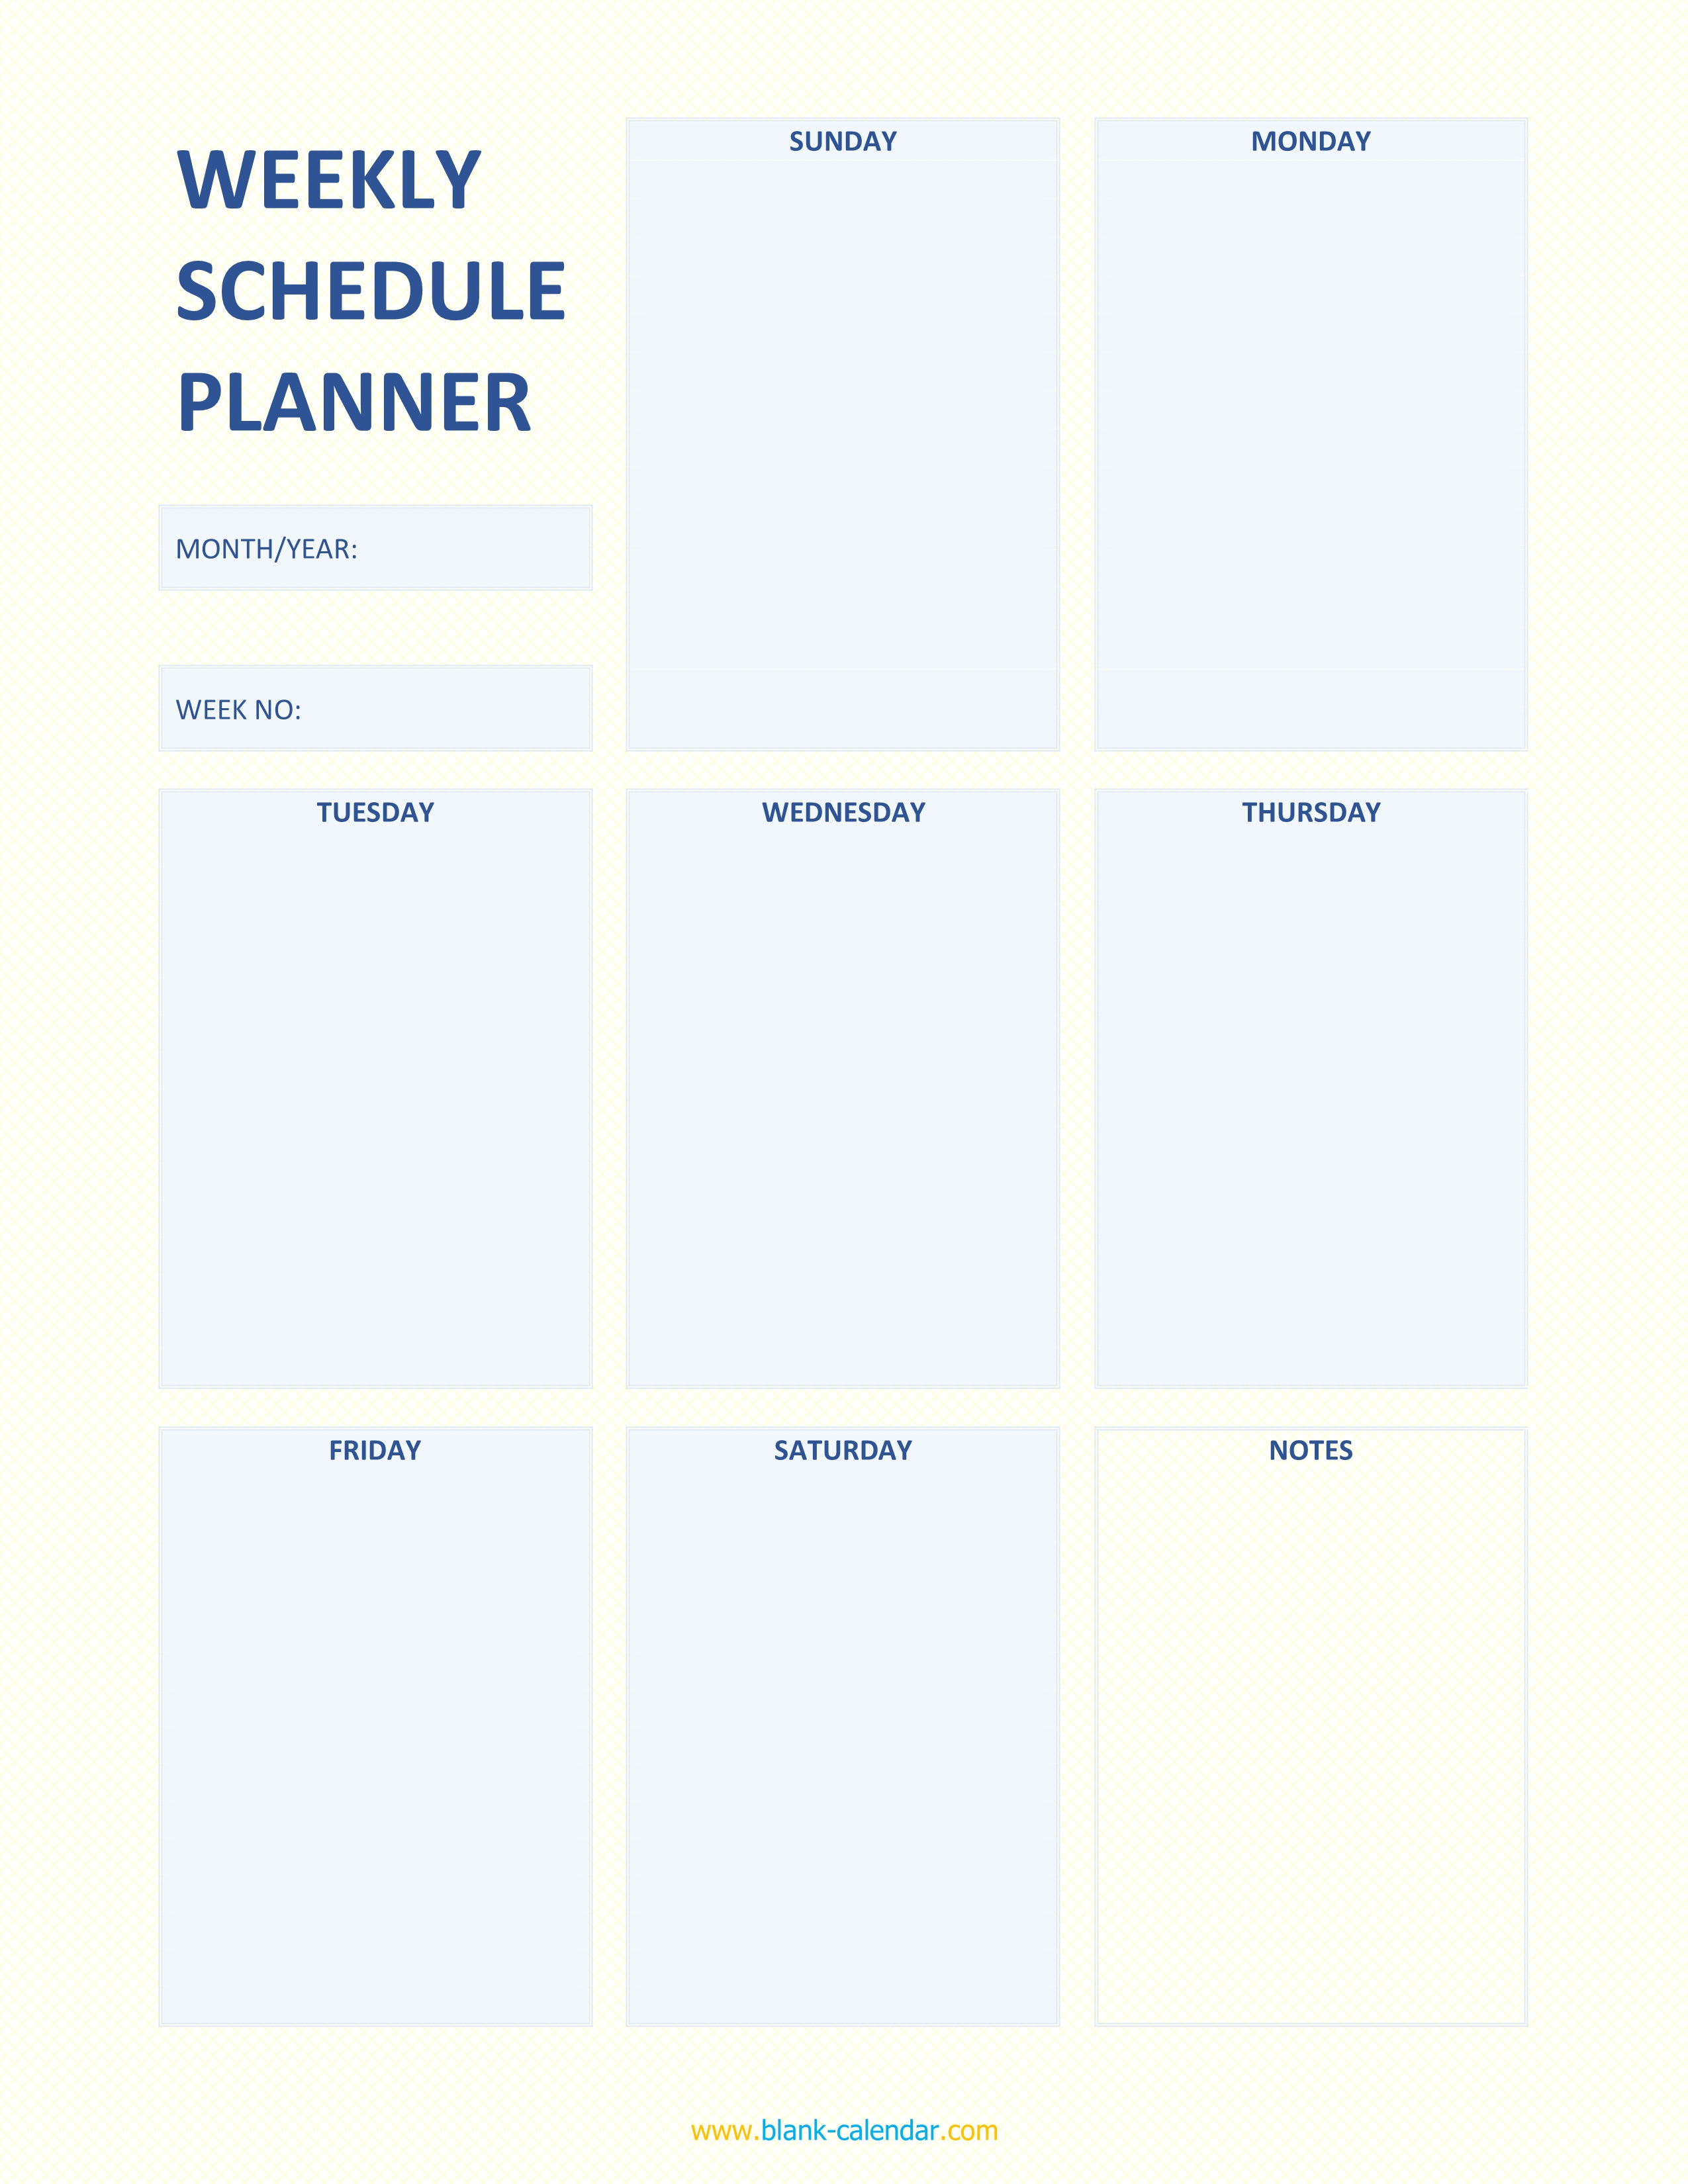 Weekly Schedule Planner Templates (WORD, EXCEL, PDF)